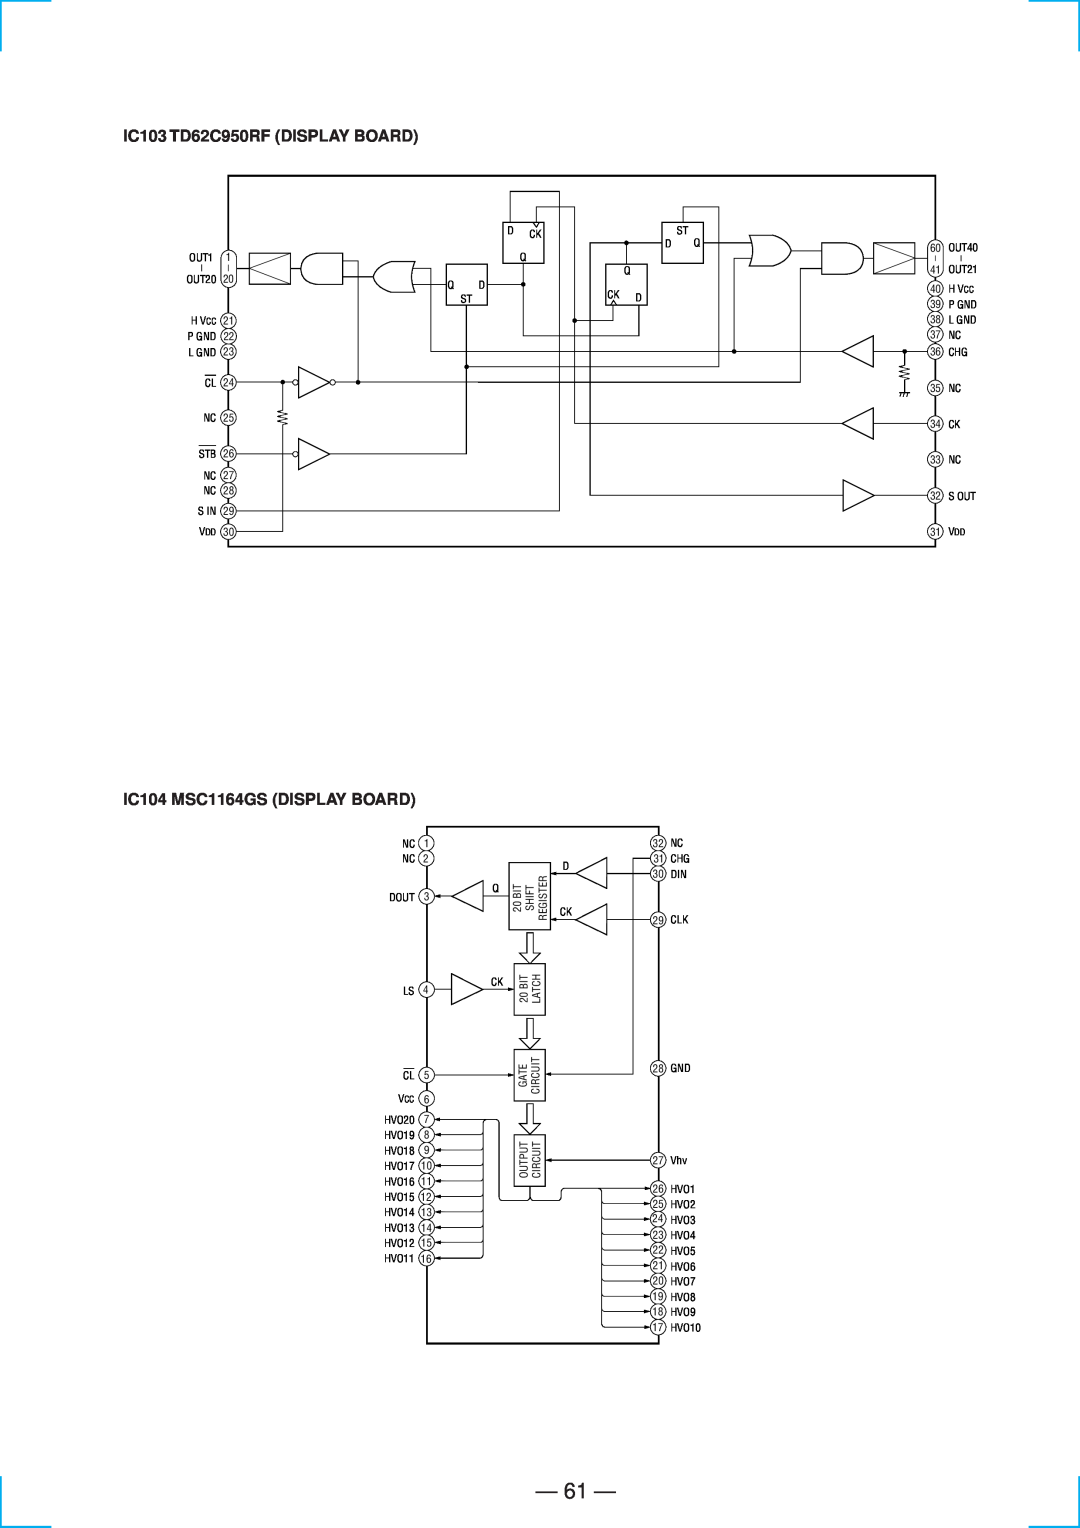 Sony STR-DE835 specifications 61, IC103 TD62C950RF DISPLAY BOARD, IC104 MSC1164GS DISPLAY BOARD 